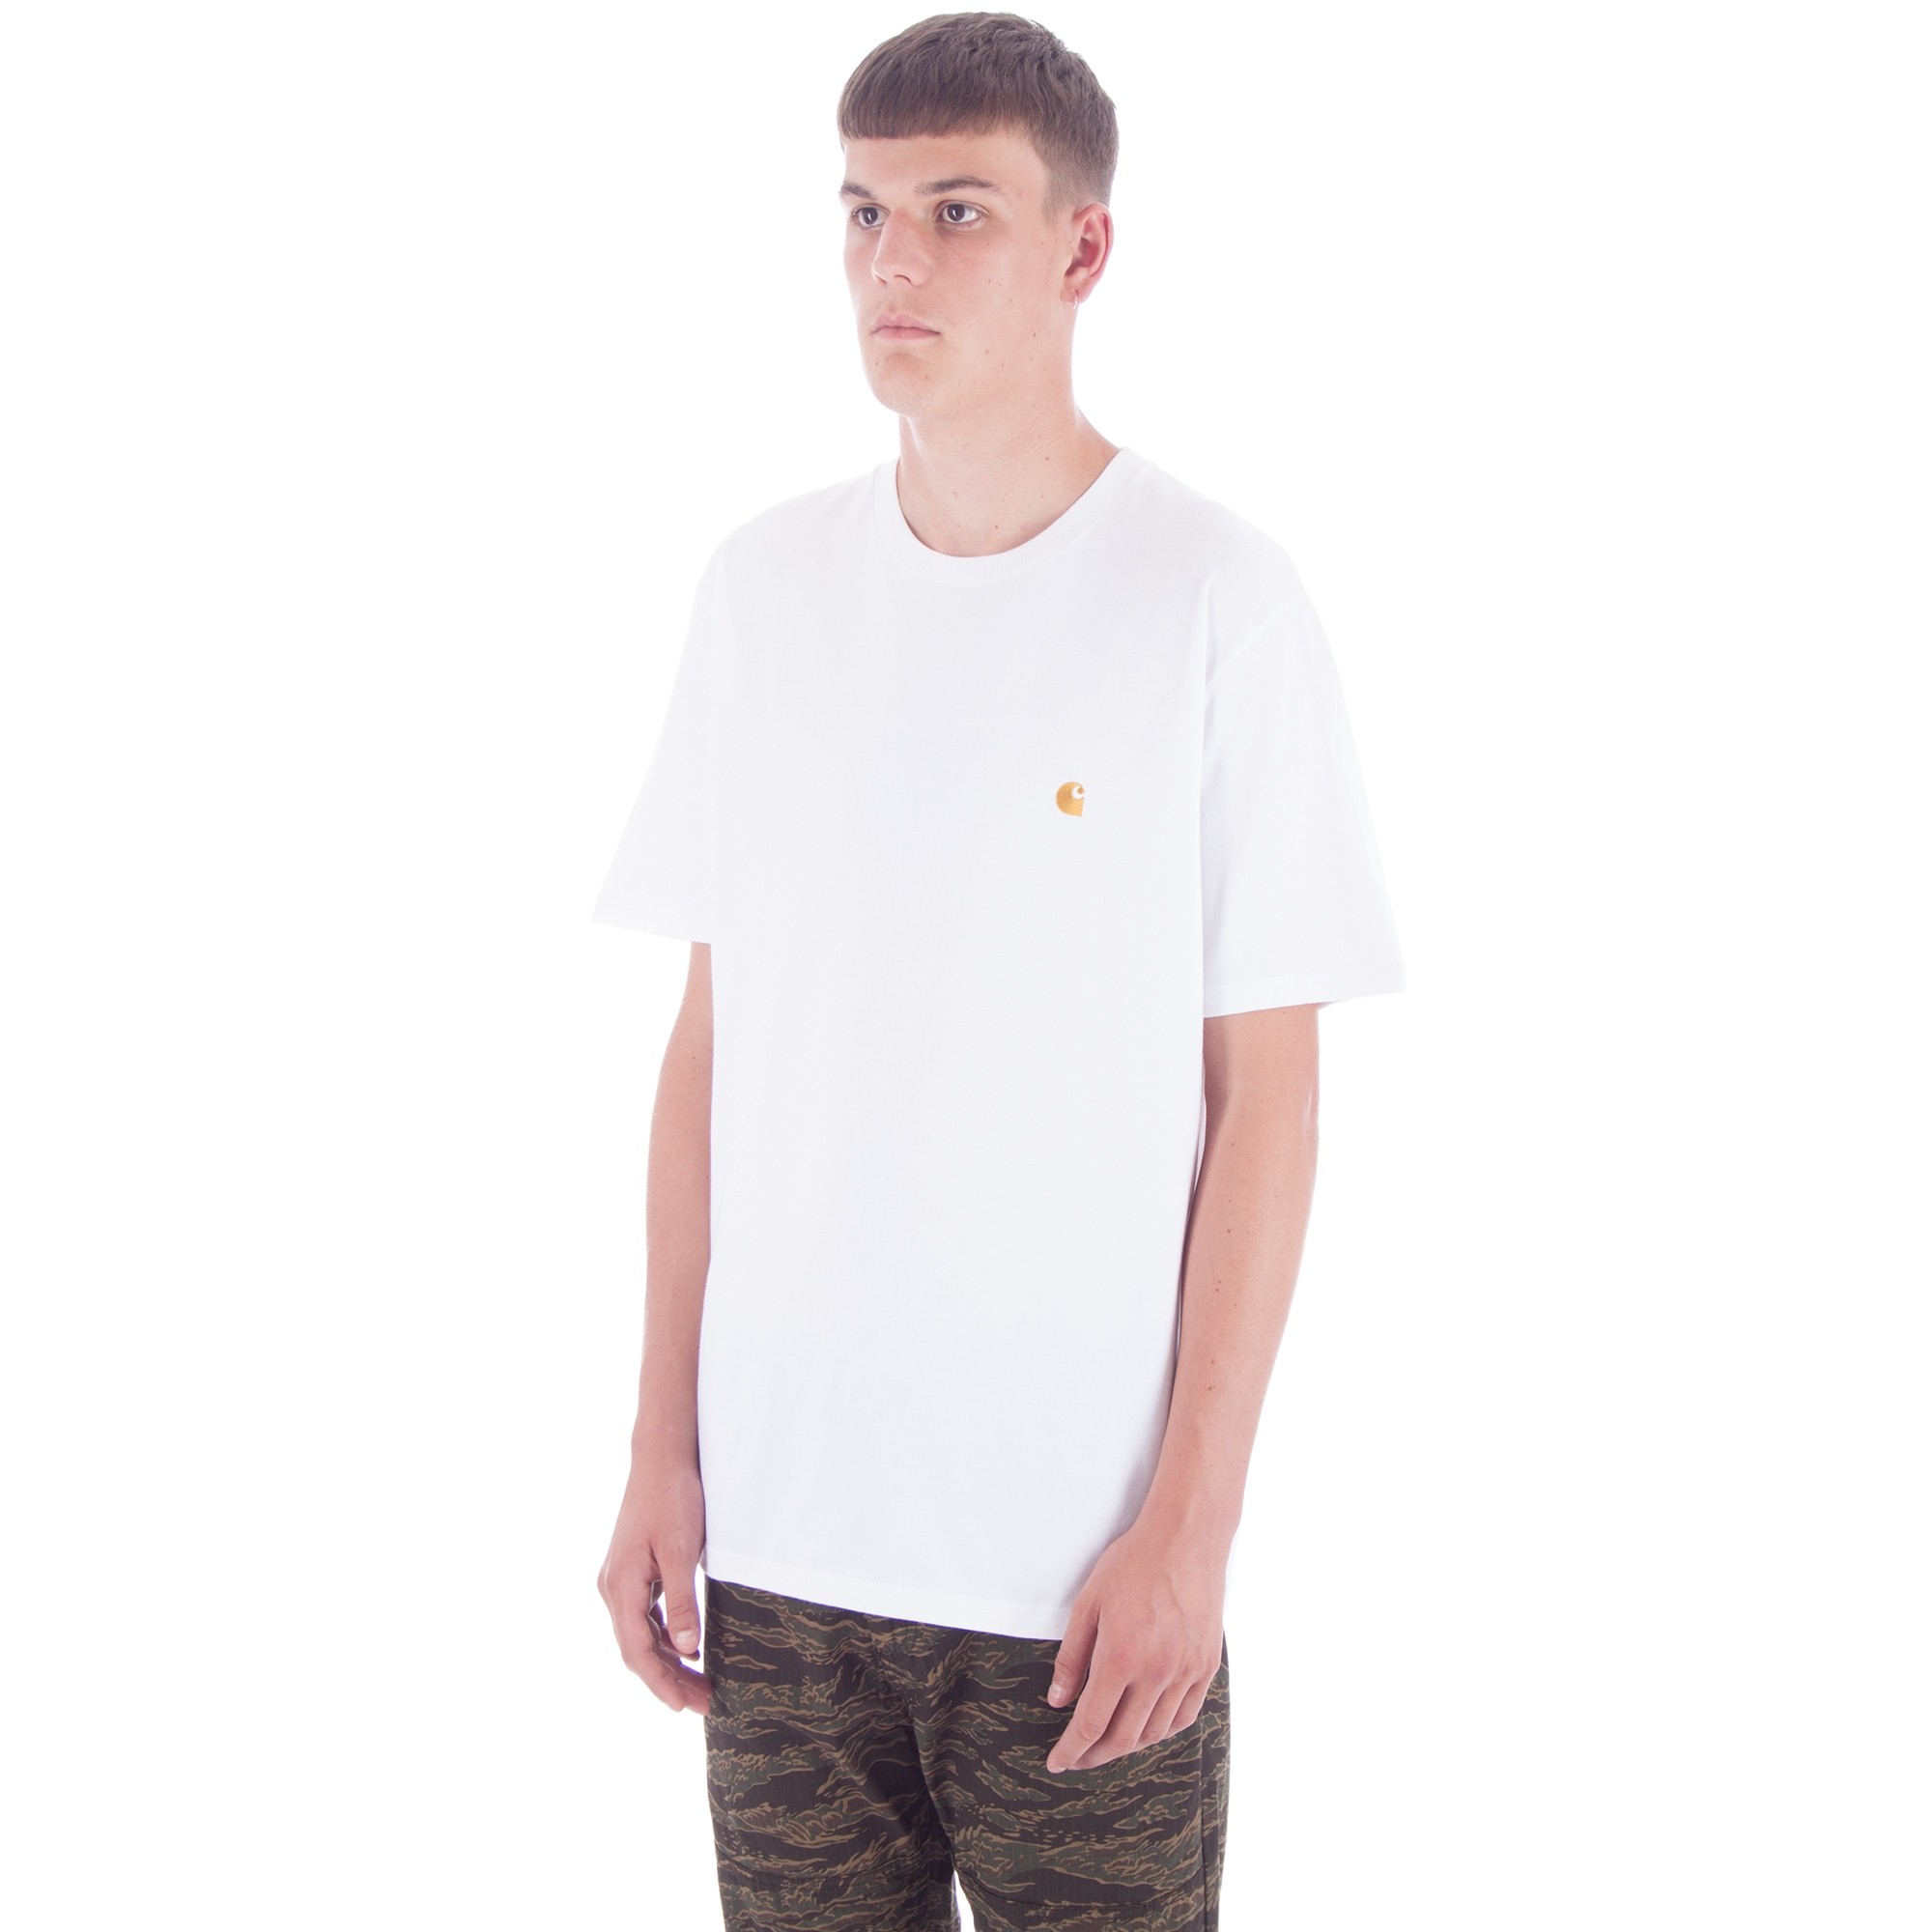 Carhartt Chase T-Shirt (White/Gold) - Consortium.